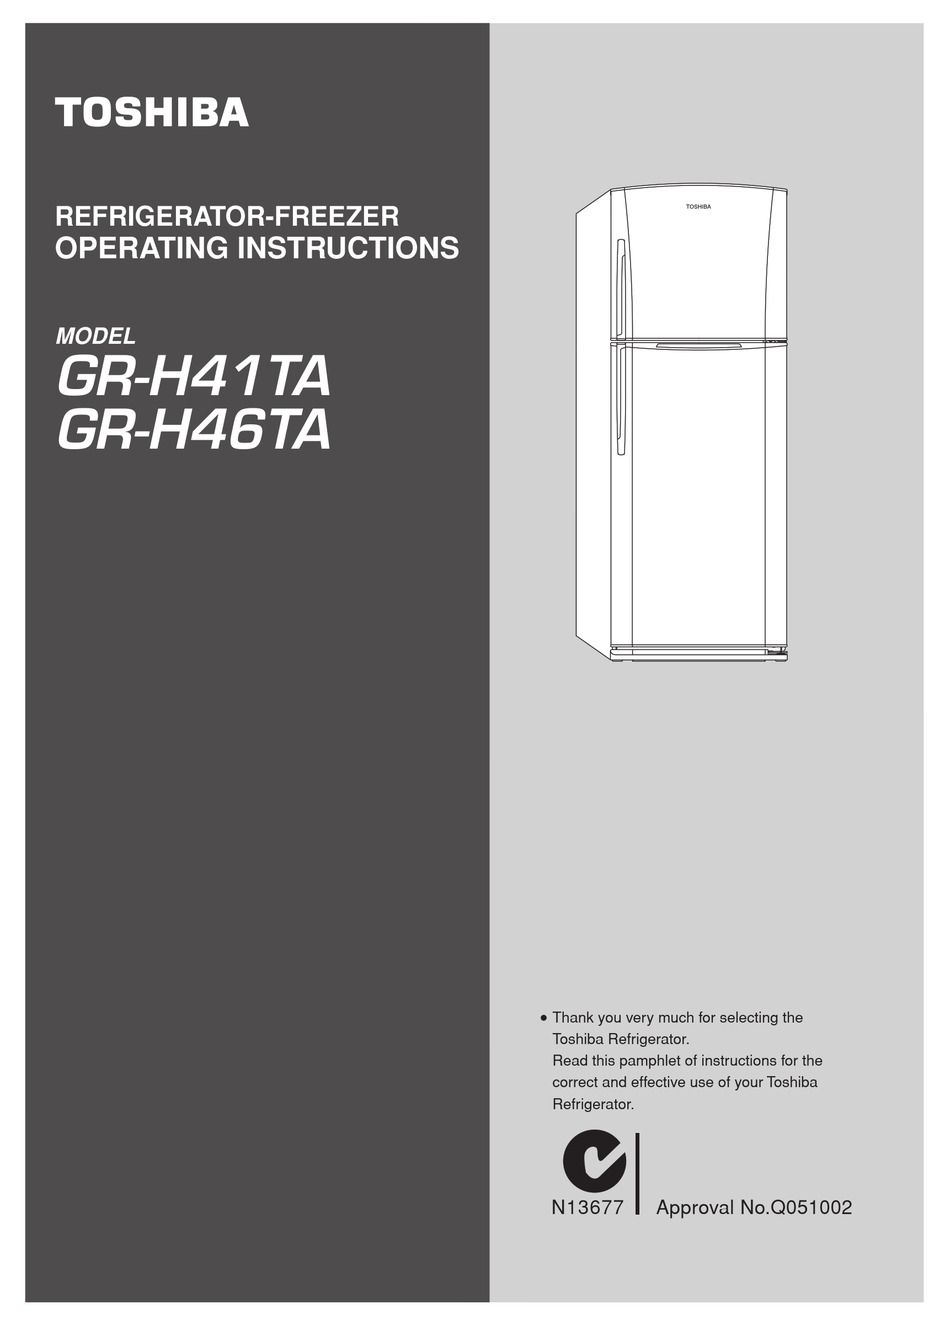 TOSHIBA GR-H41TA REFRIGERATOR OPERATING INSTRUCTIONS MANUAL 